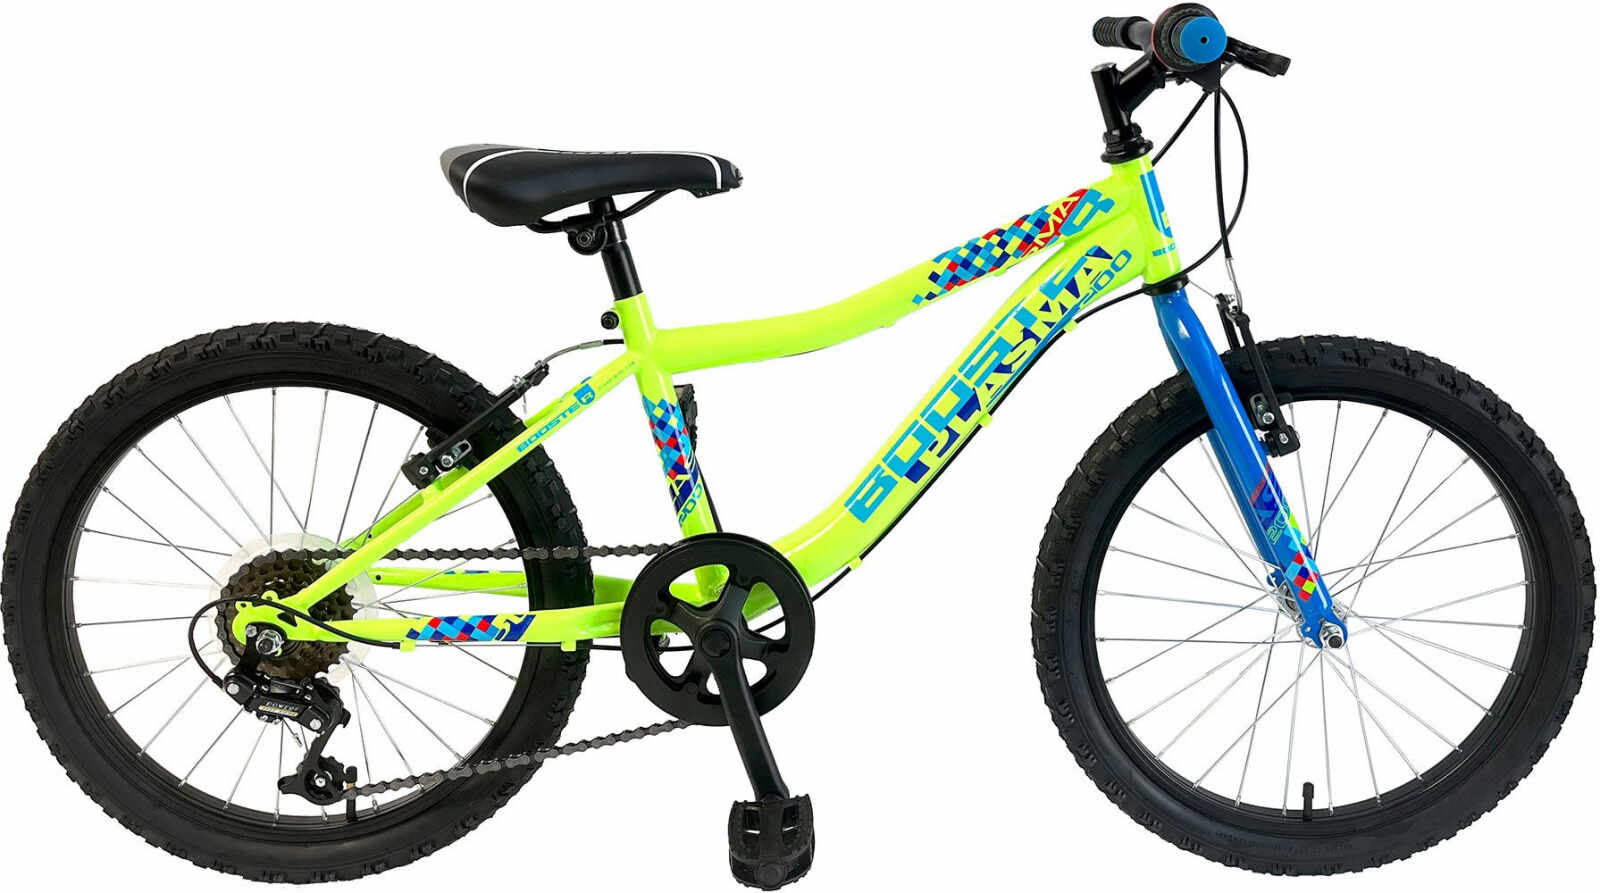 Bicicleta Copii Booster Plasma - 20 Inch, Galben-Albastru